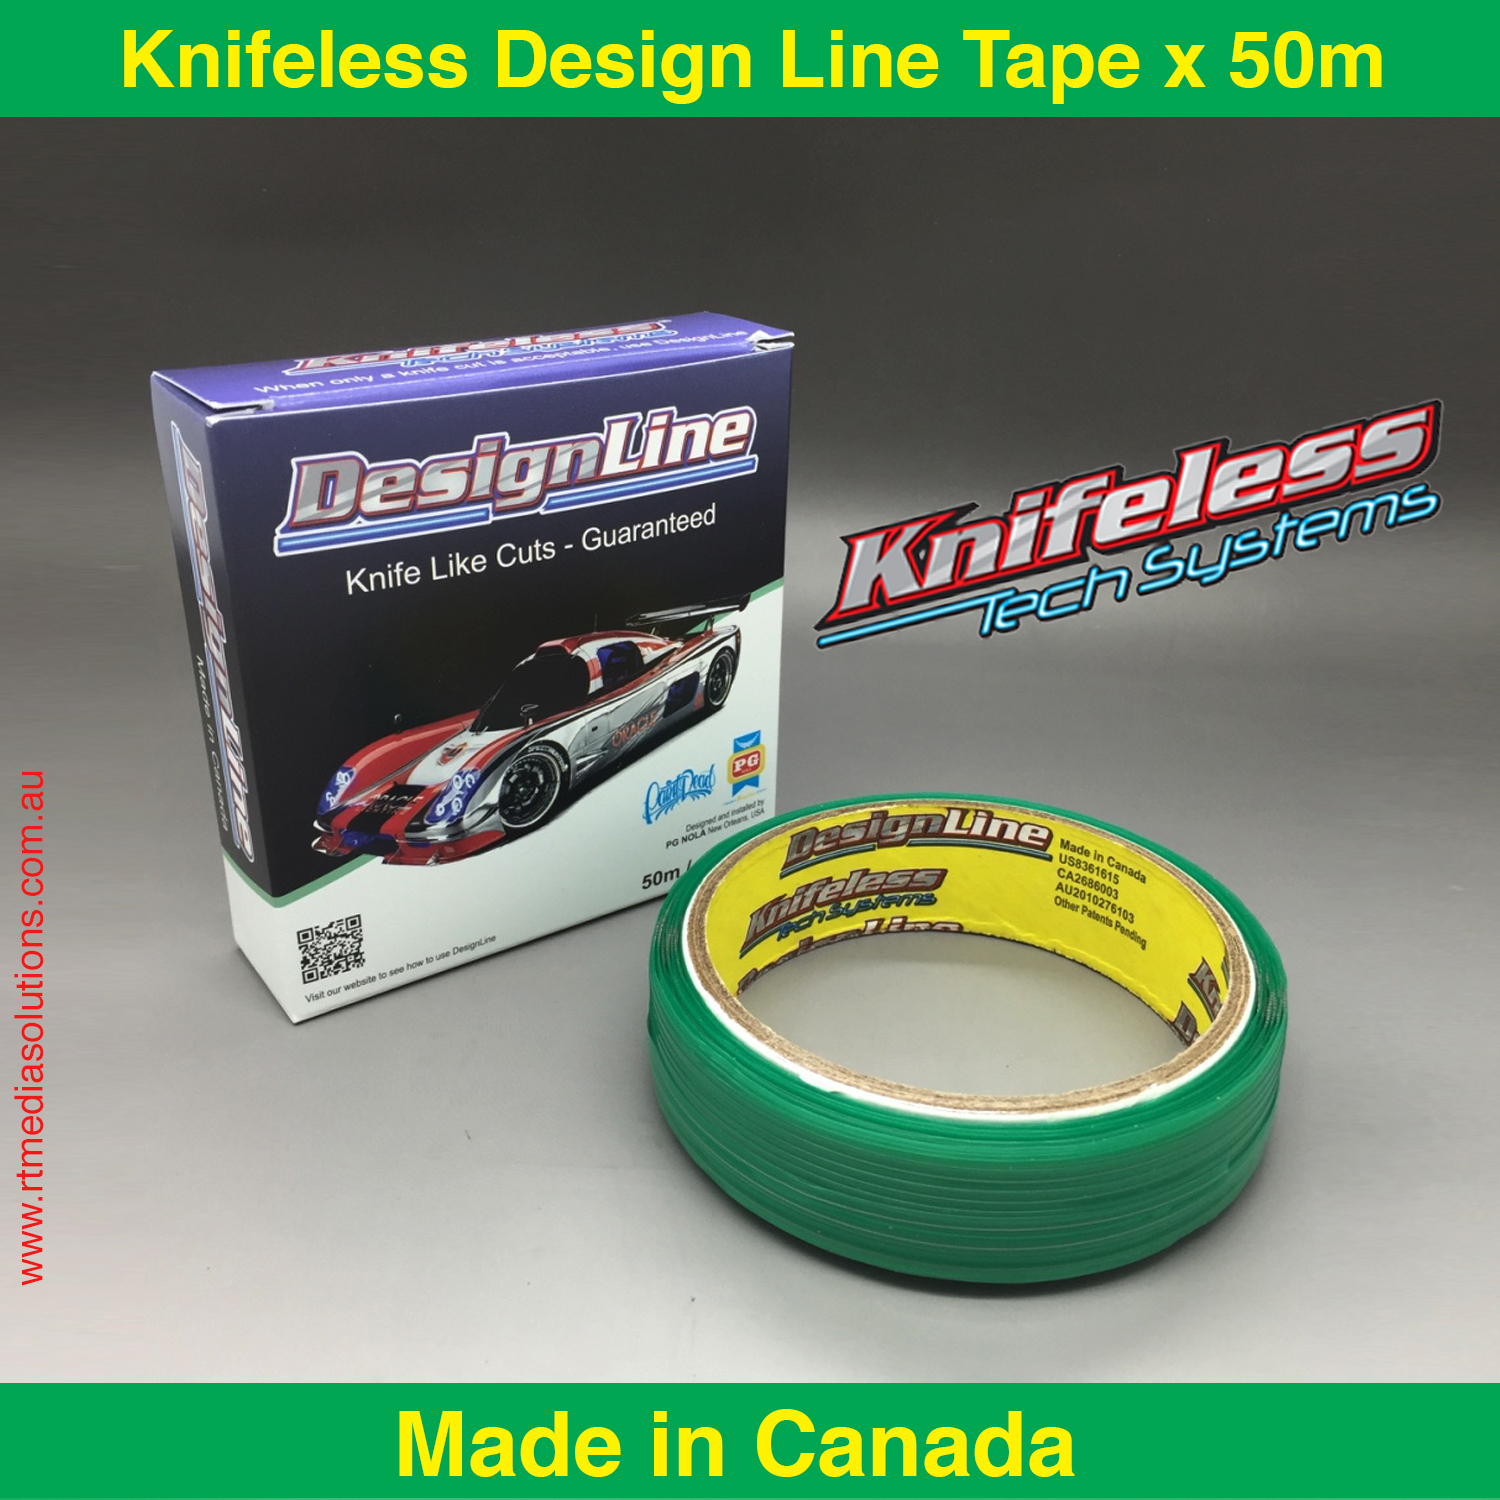 3M Knifeless Design Line Tape x 50m